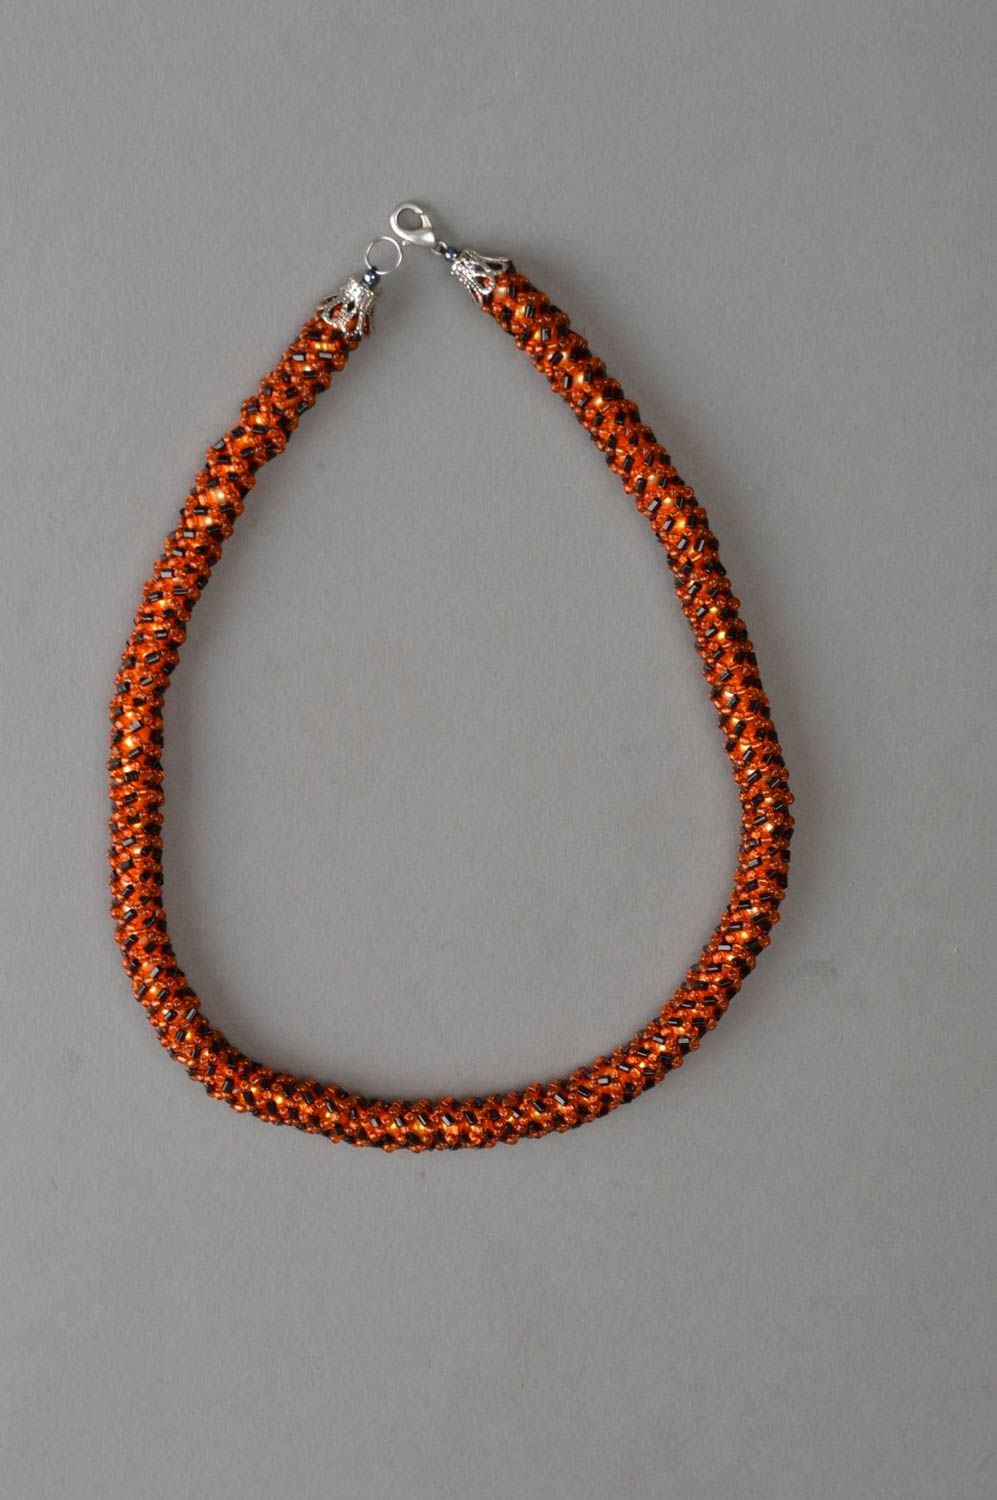 Stylish handmade beaded cord necklace designer necklace for women gift ideas photo 2